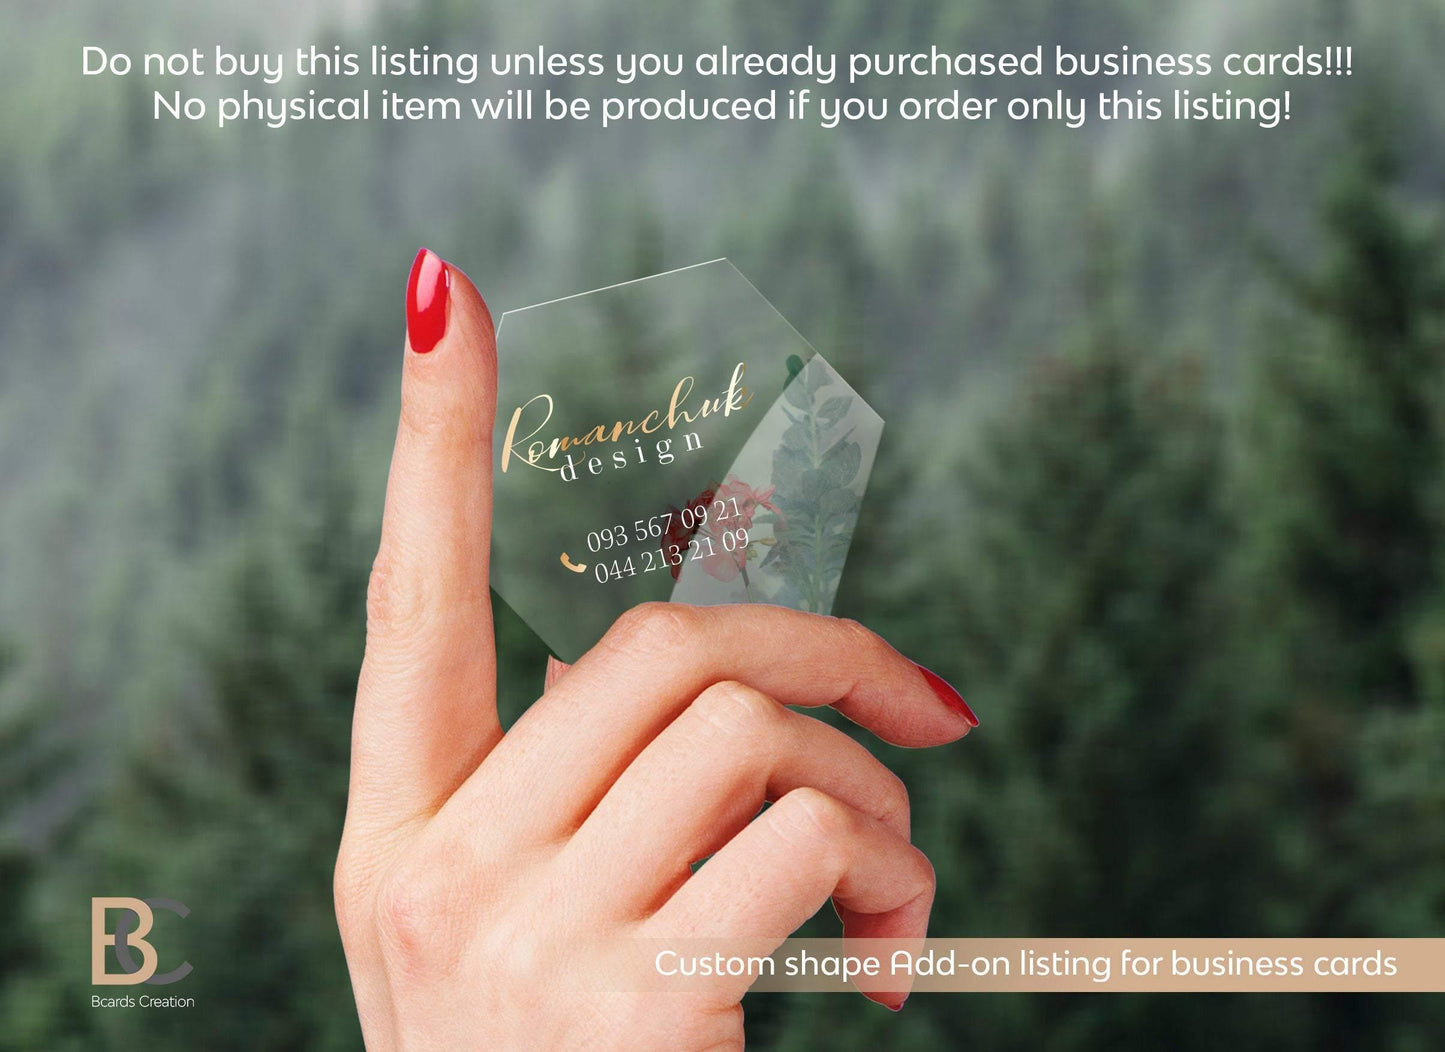 Custom Business card Shape Add-on Custom Business card Shape Add-on Business_cards, Extra Services BcardsCreation